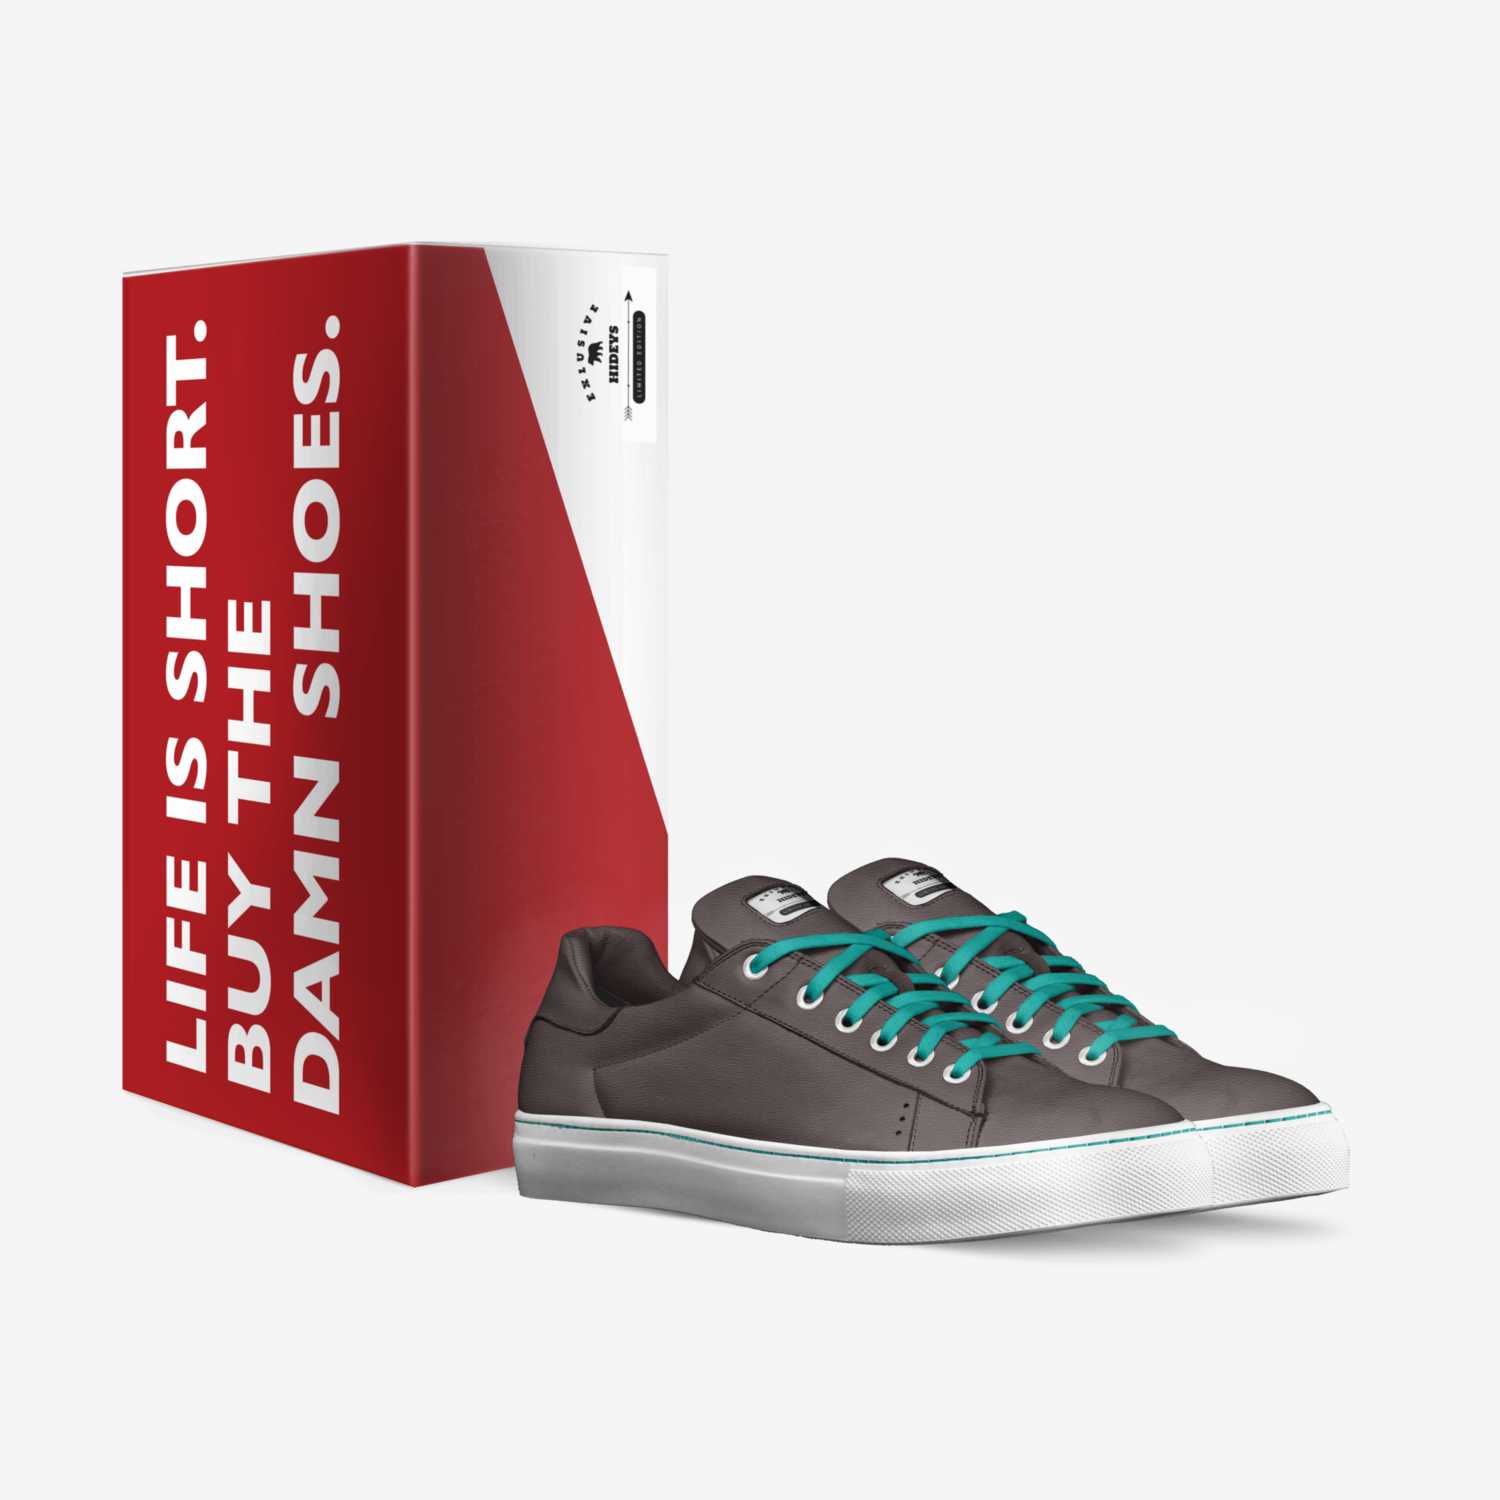 Hideyss custom made in Italy shoes by Braidon | Box view